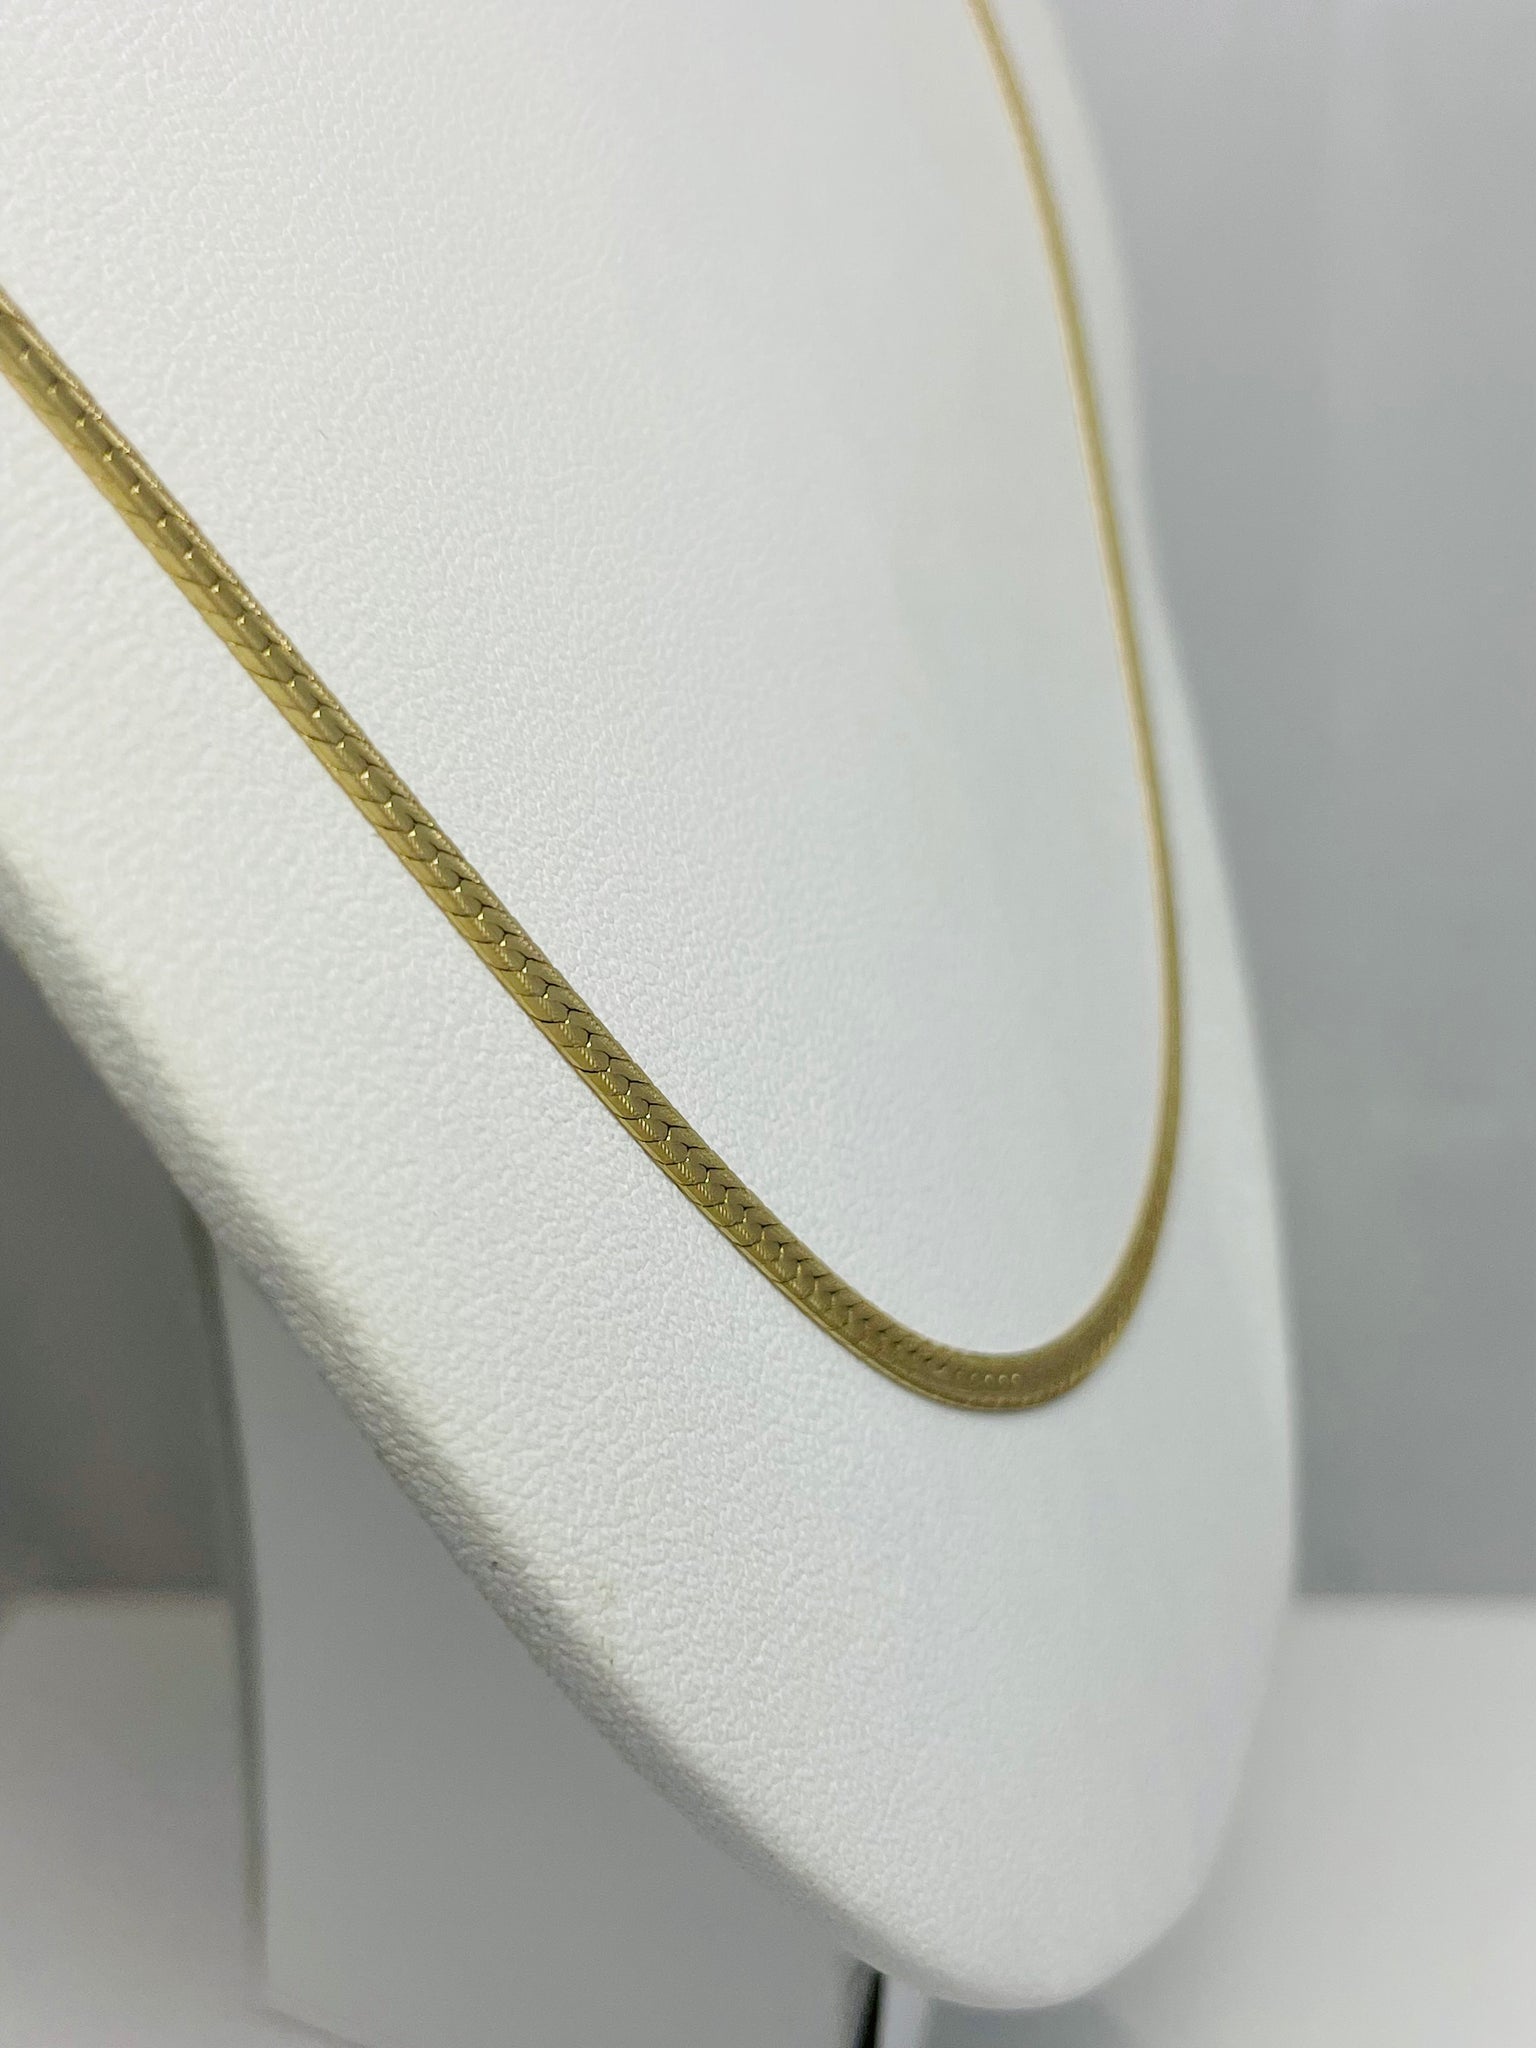 24" 14k Solid Yellow Gold Diamond Cut Herringbone Chain Necklace Italy